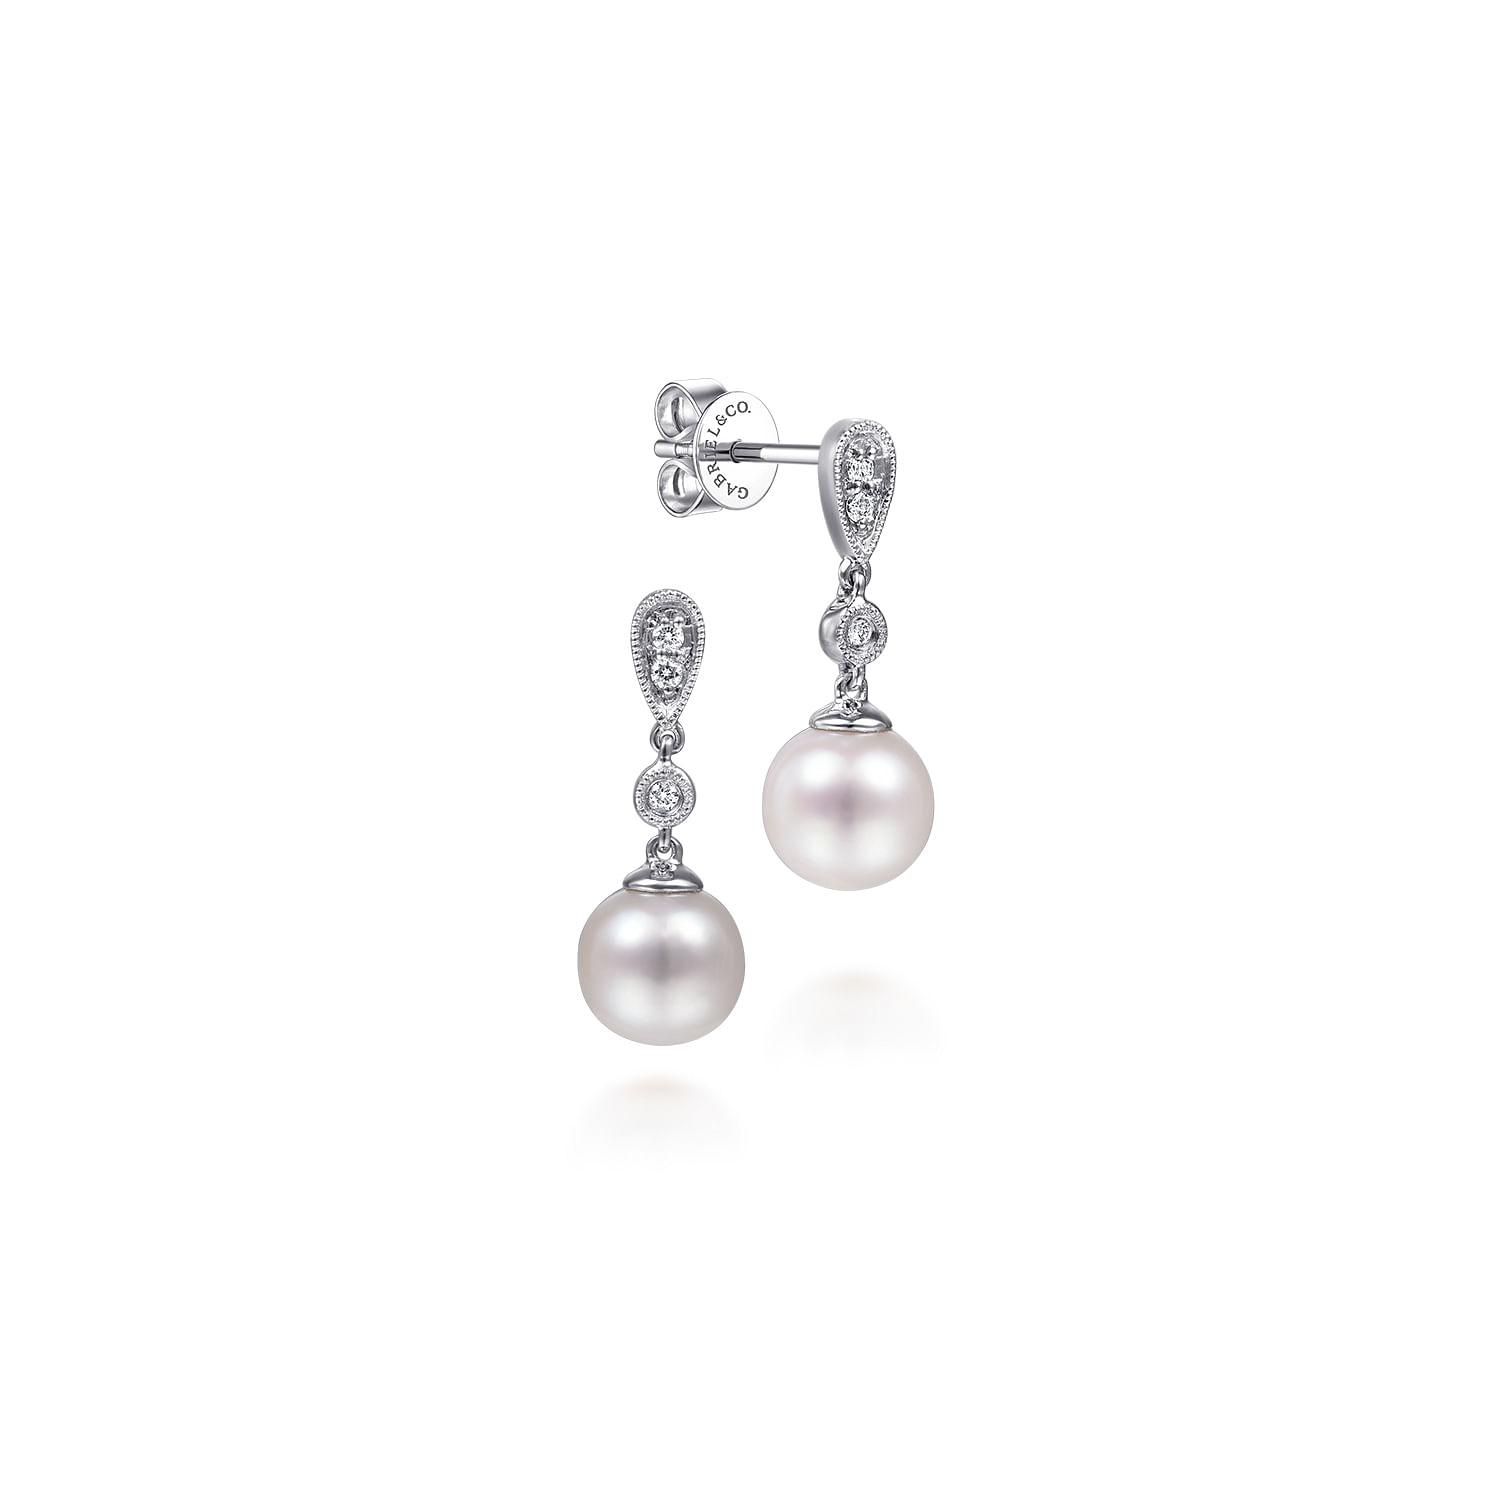 Gabriel - 14K White Gold Vintage Inspired Style Diamond Pearl Drop Earrings